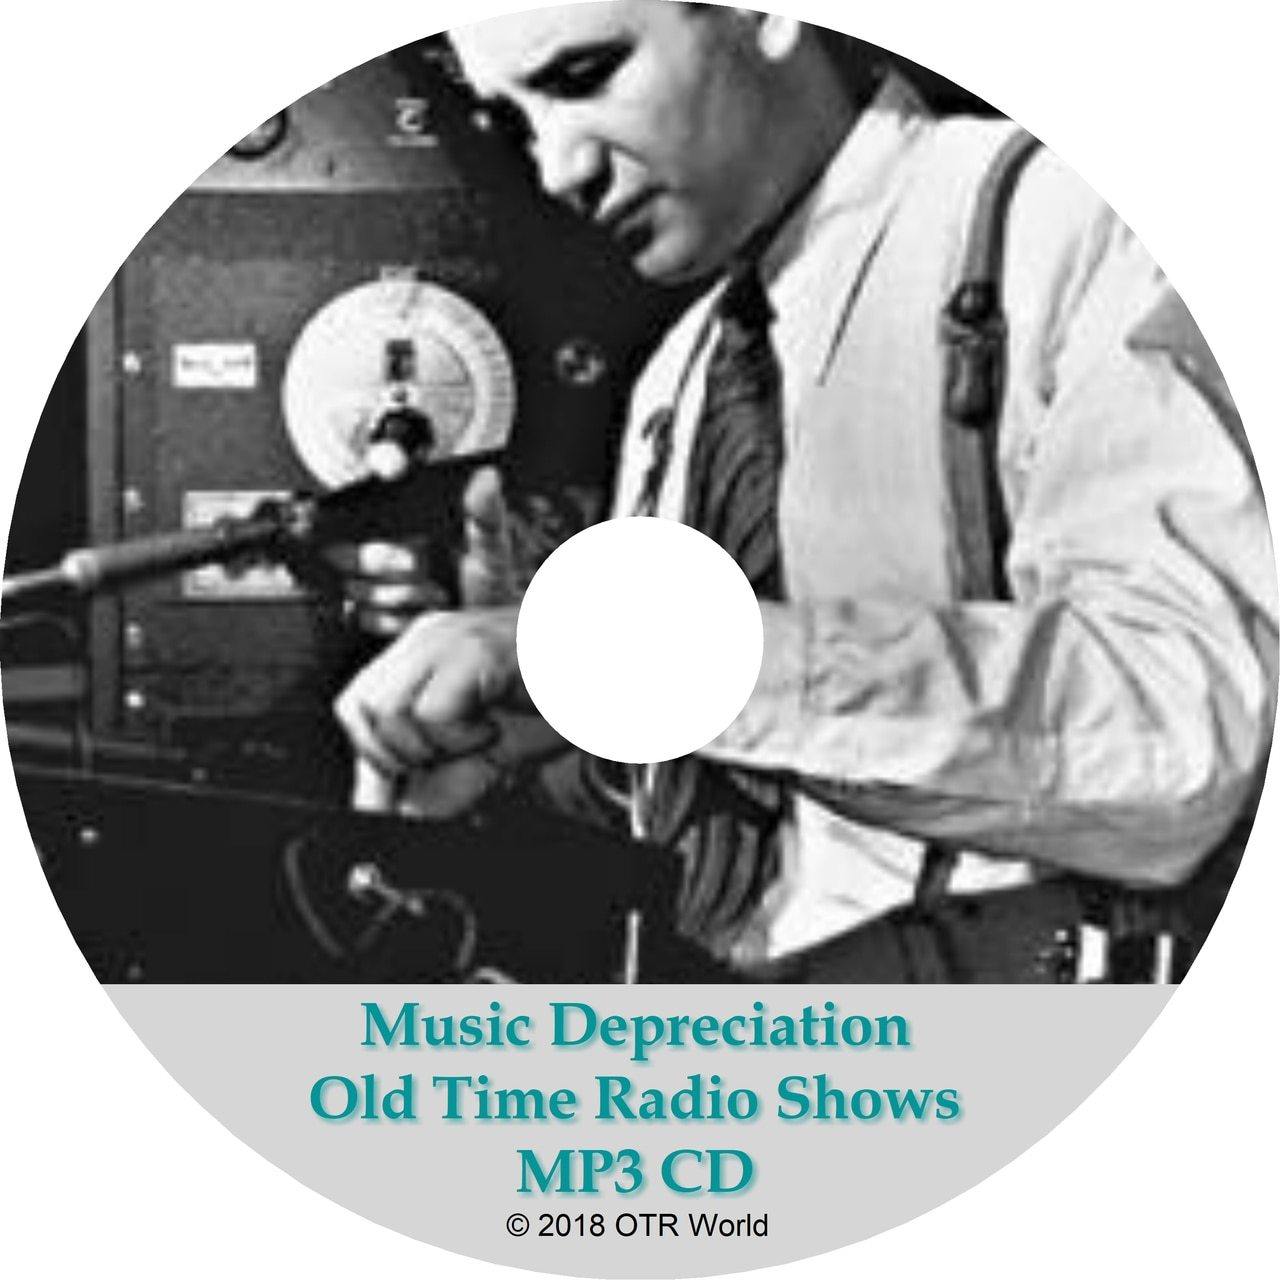 Music Depreciation Old Time Radio Shows 24 Episodes On MP3 CD - OTR World